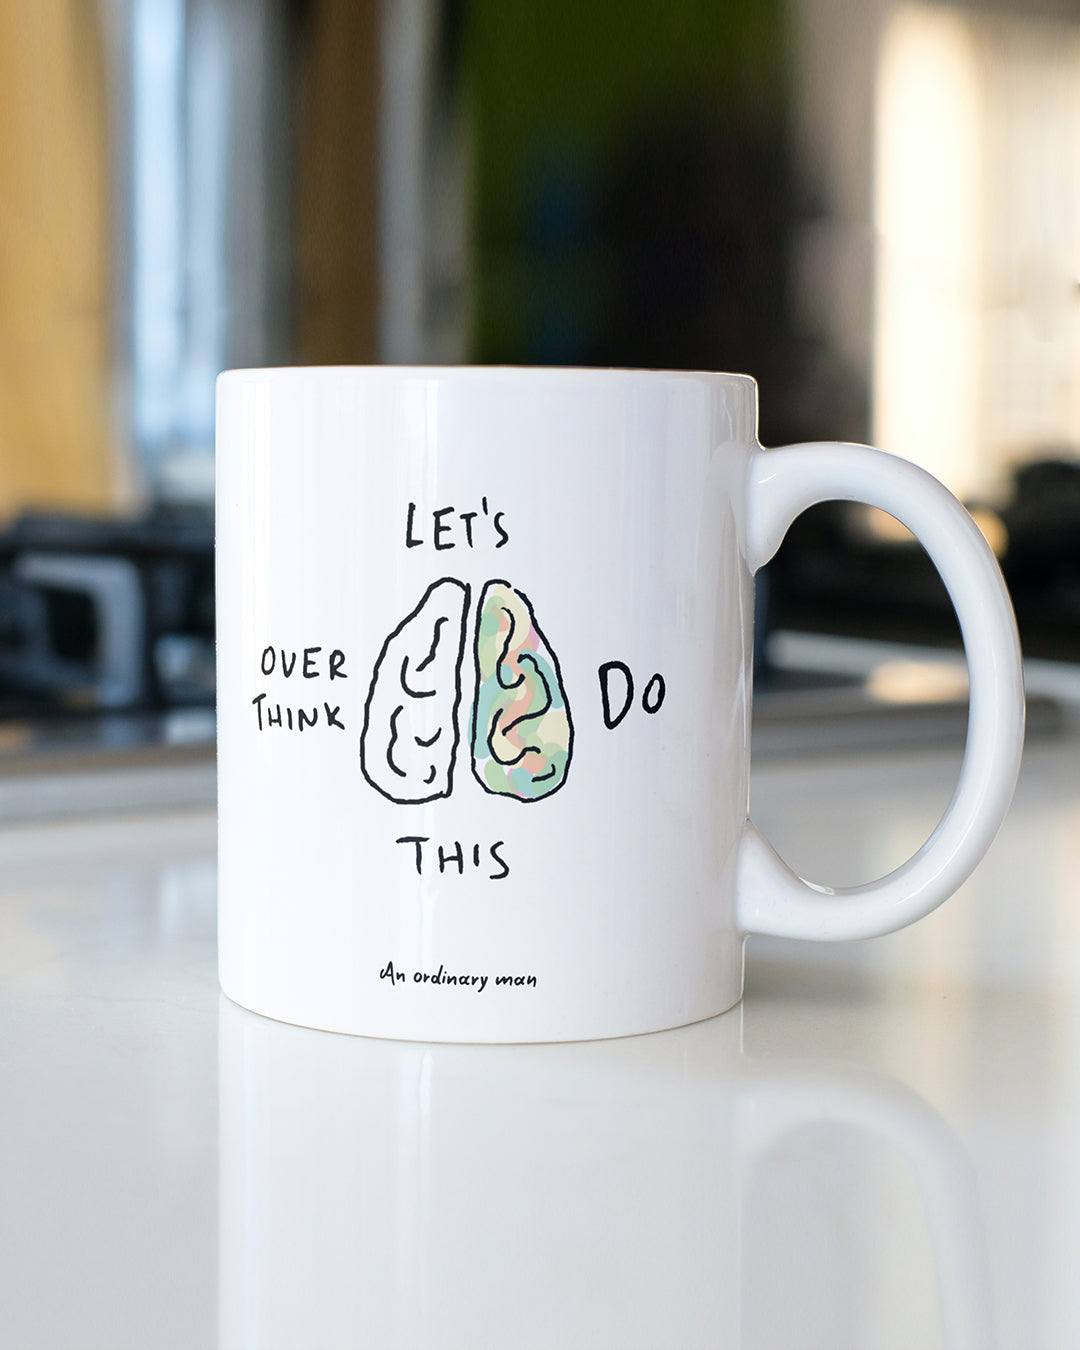 Motivational gift mug for coworker or friend